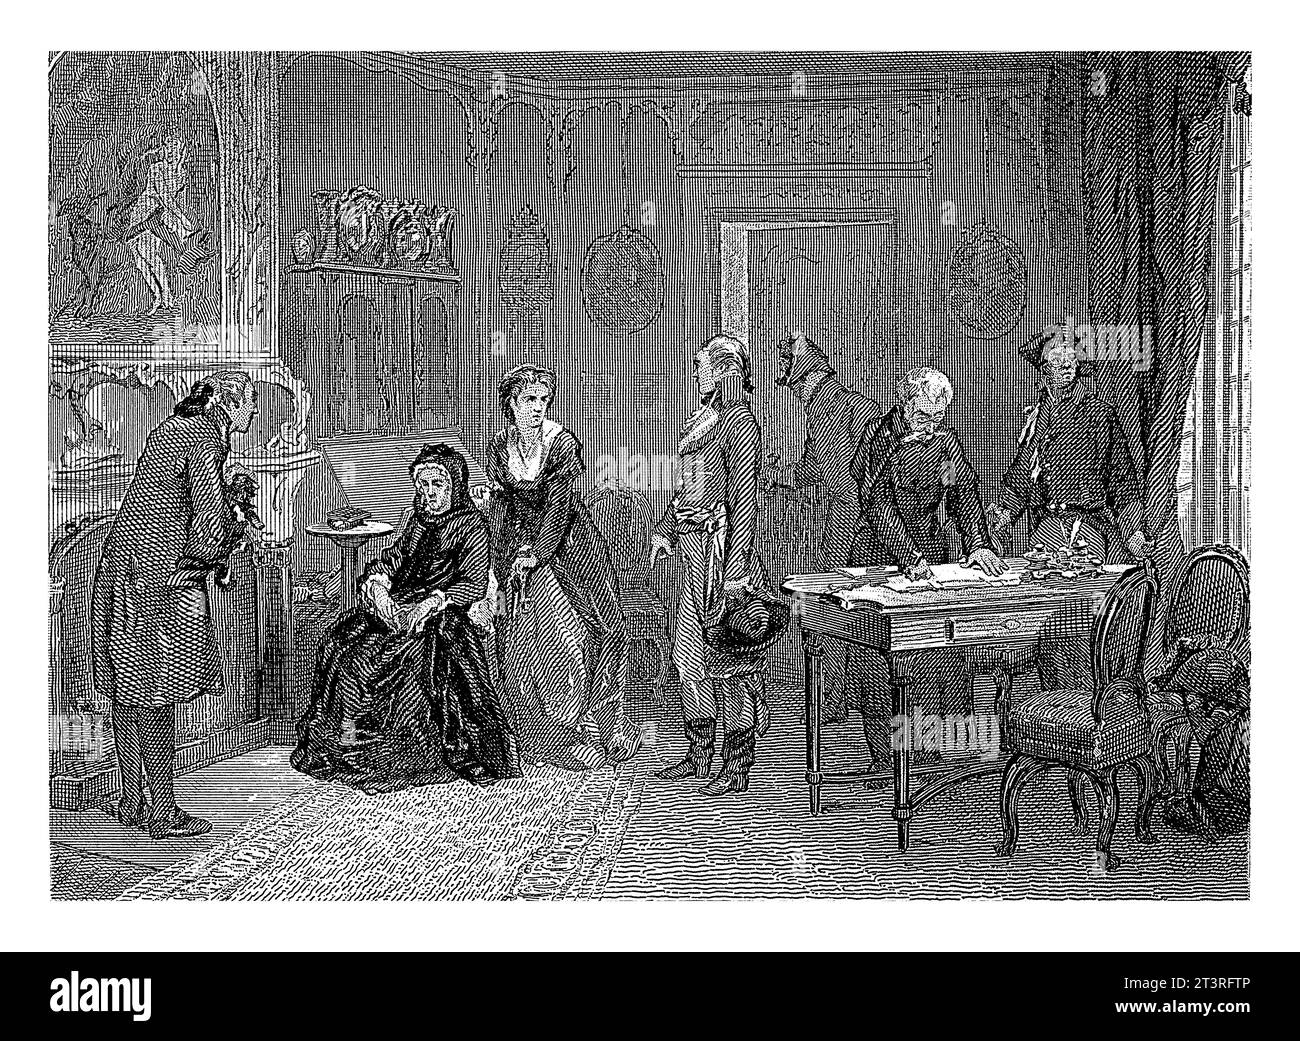 Departure, Men, Women, Johann Heinrich Maria Hubert Rennefeld, after Charles Rochussen, 1872 View of a room with men and women. Stock Photo